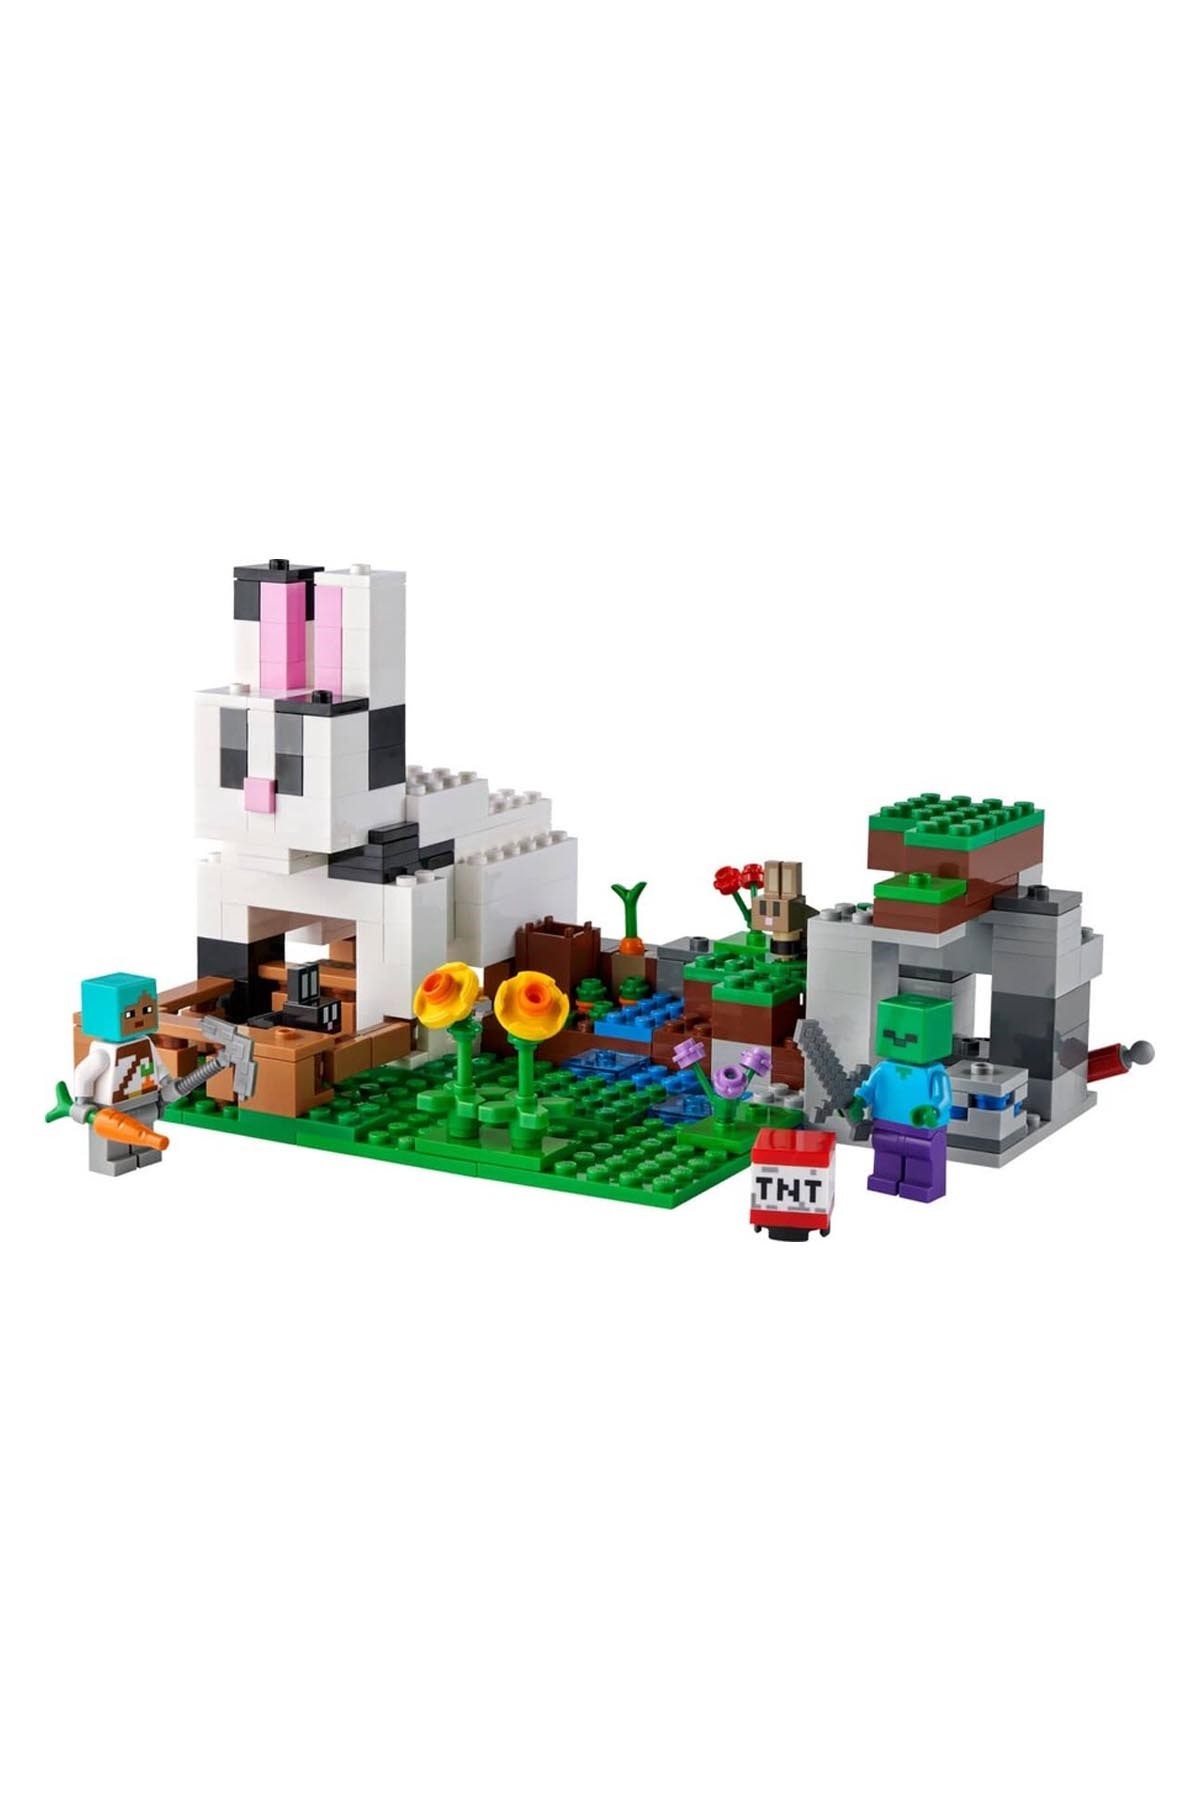 Lego Minecraft Tavşan Çiftliği 21181